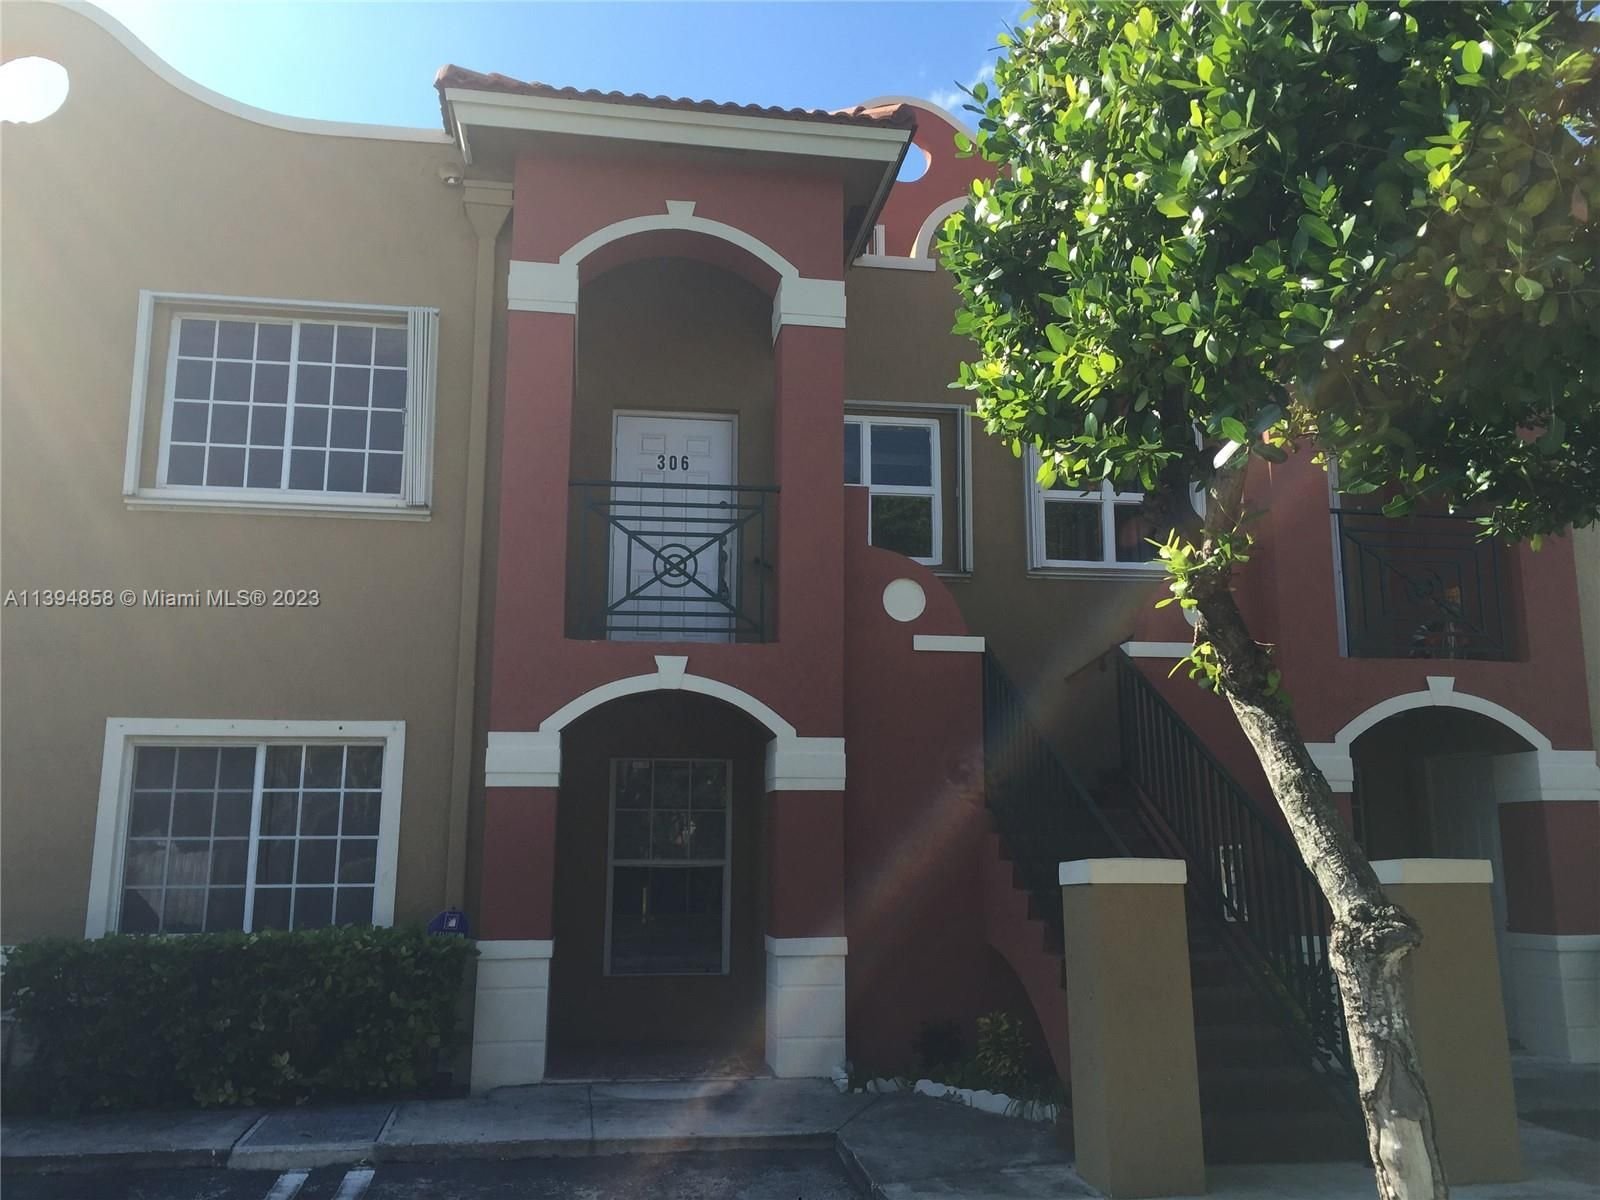 Real estate property located at 15330 134th Pl #306, Miami-Dade County, Miami, FL